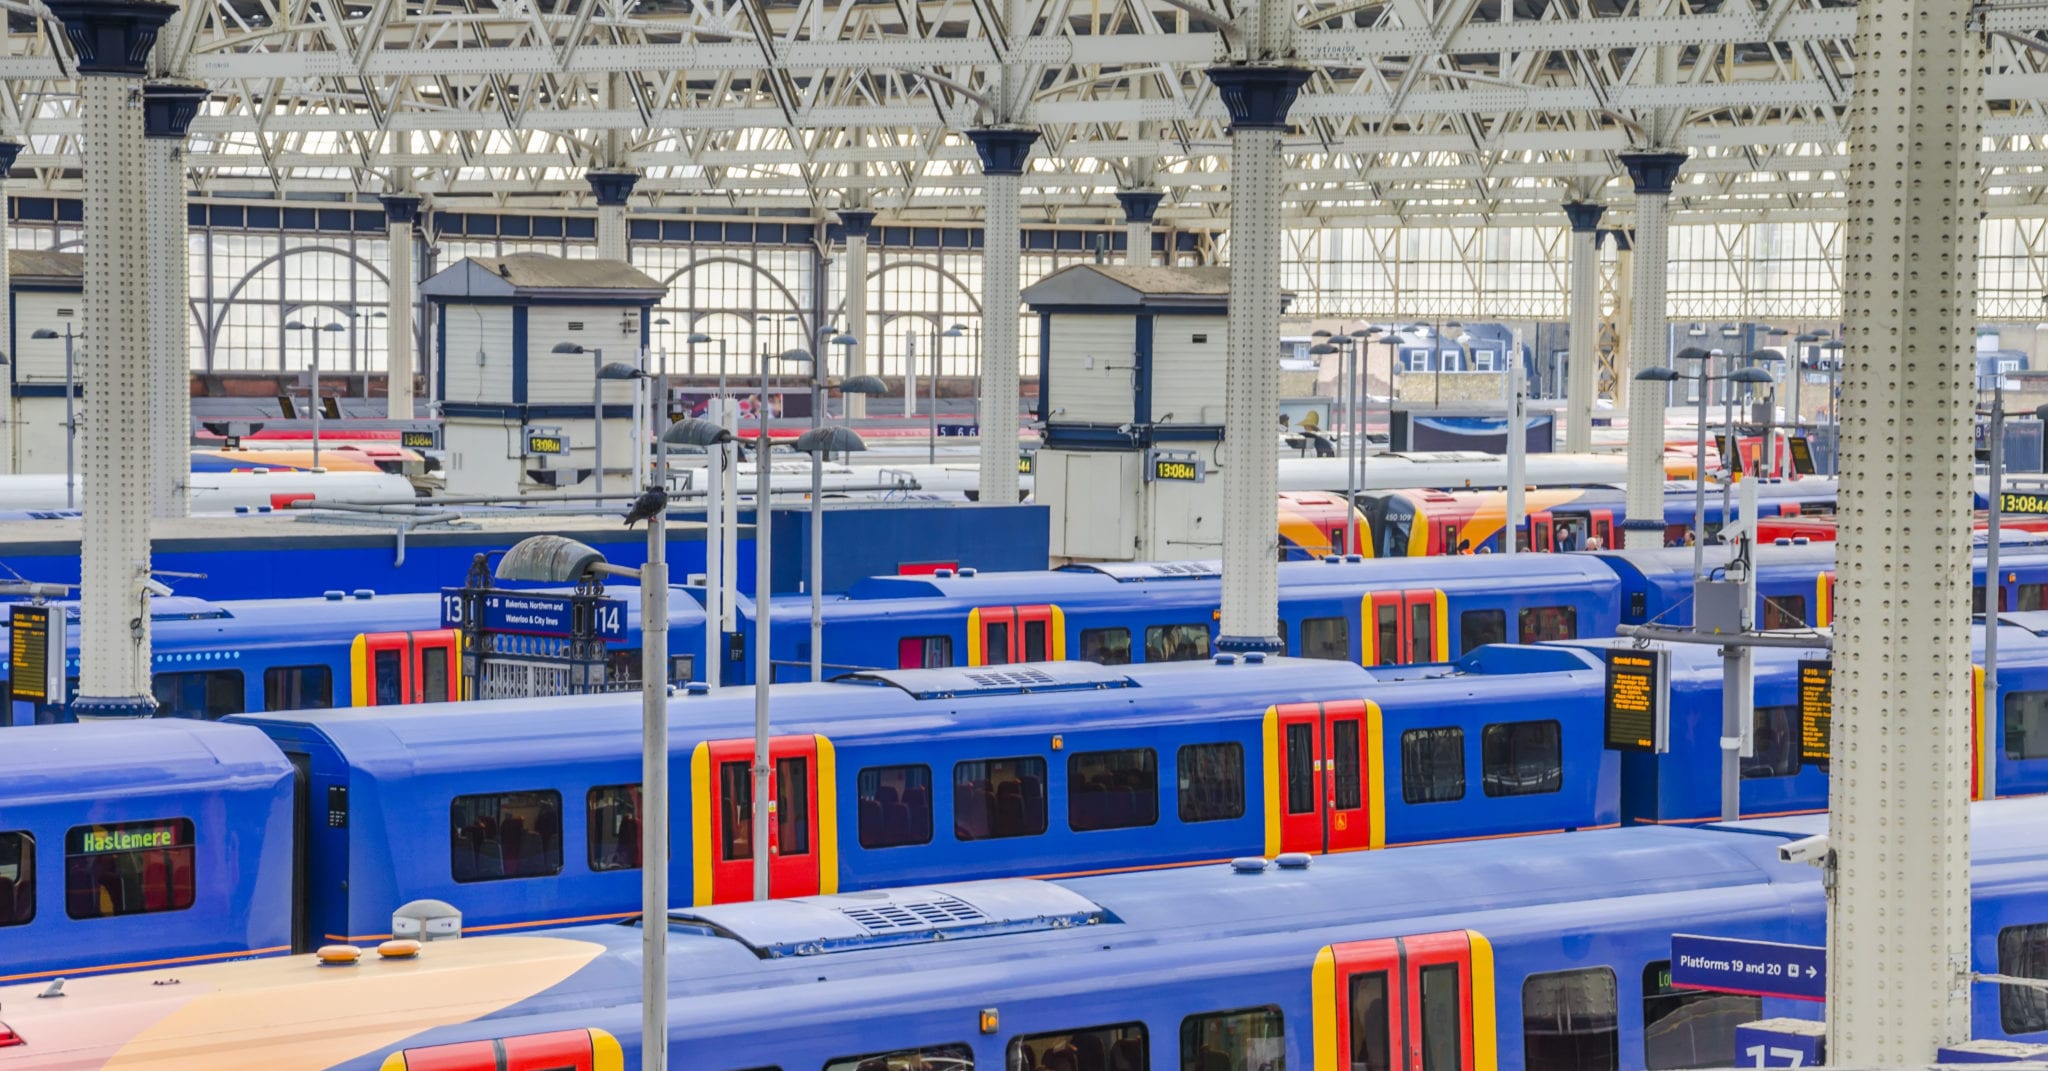 trains at waterloo station, london, uk, network rail